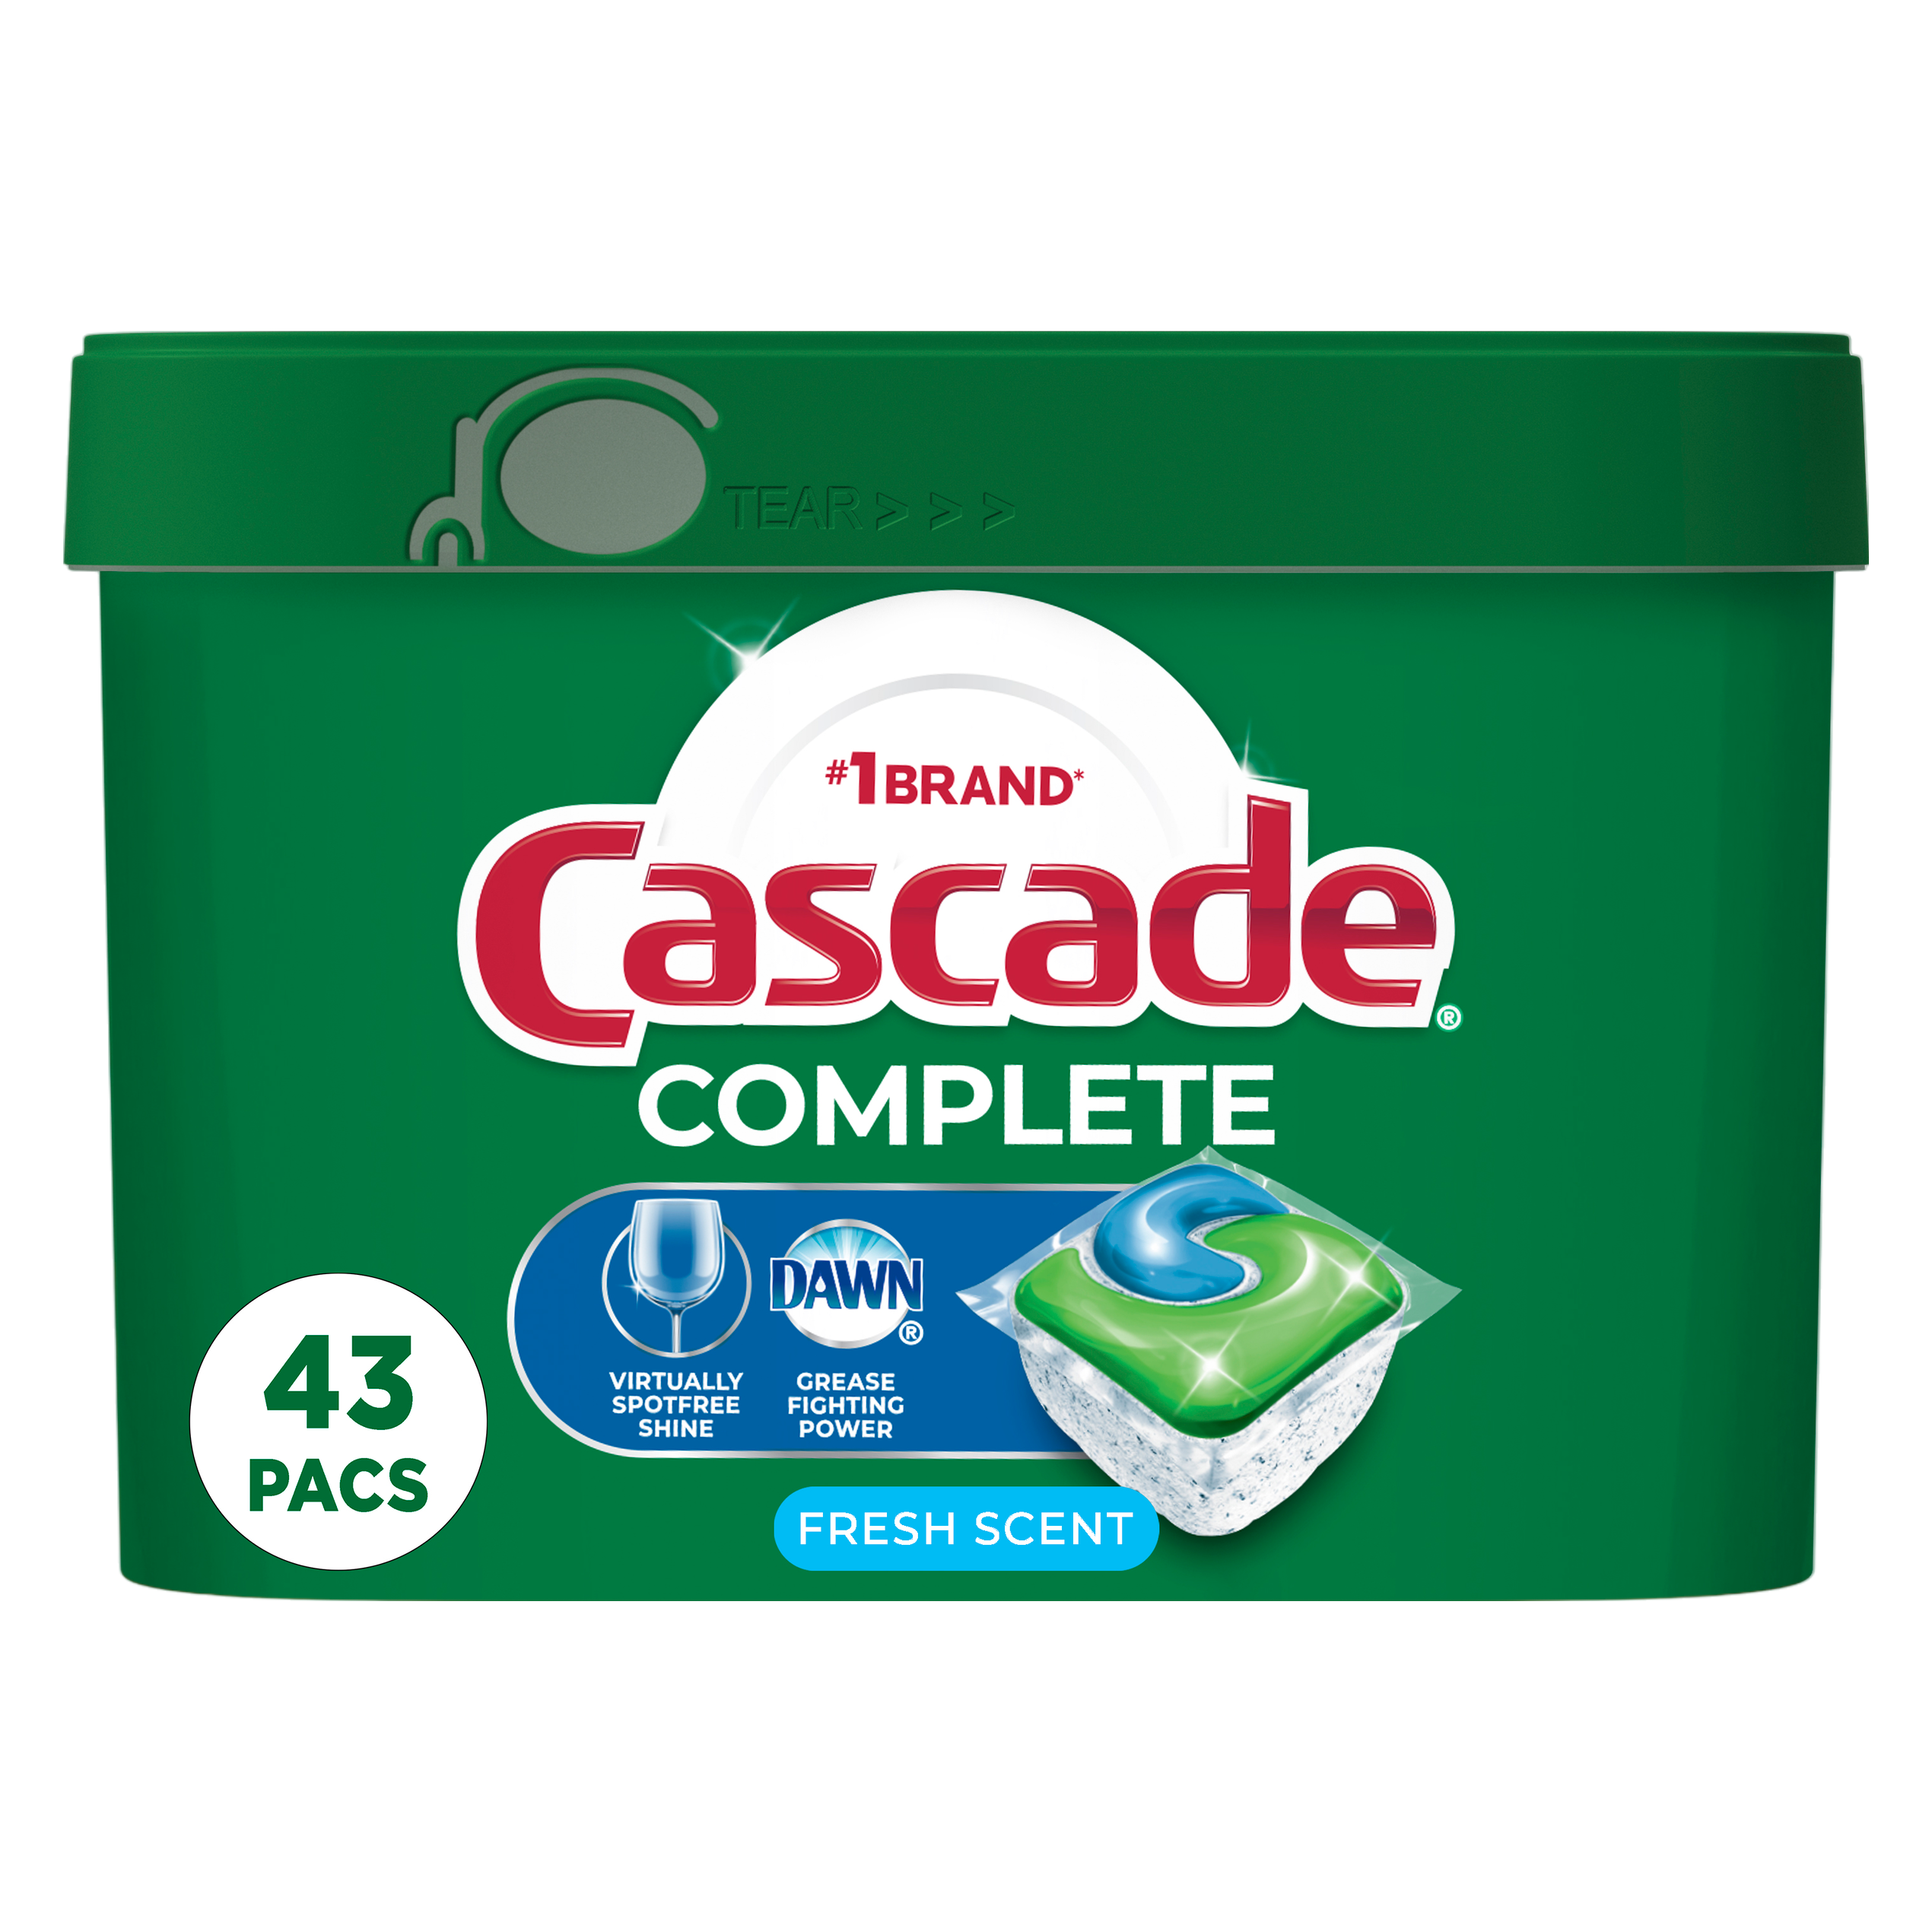 Cascade Complete Pods ActionPacs Dishwasher Detergent Fresh 43ct